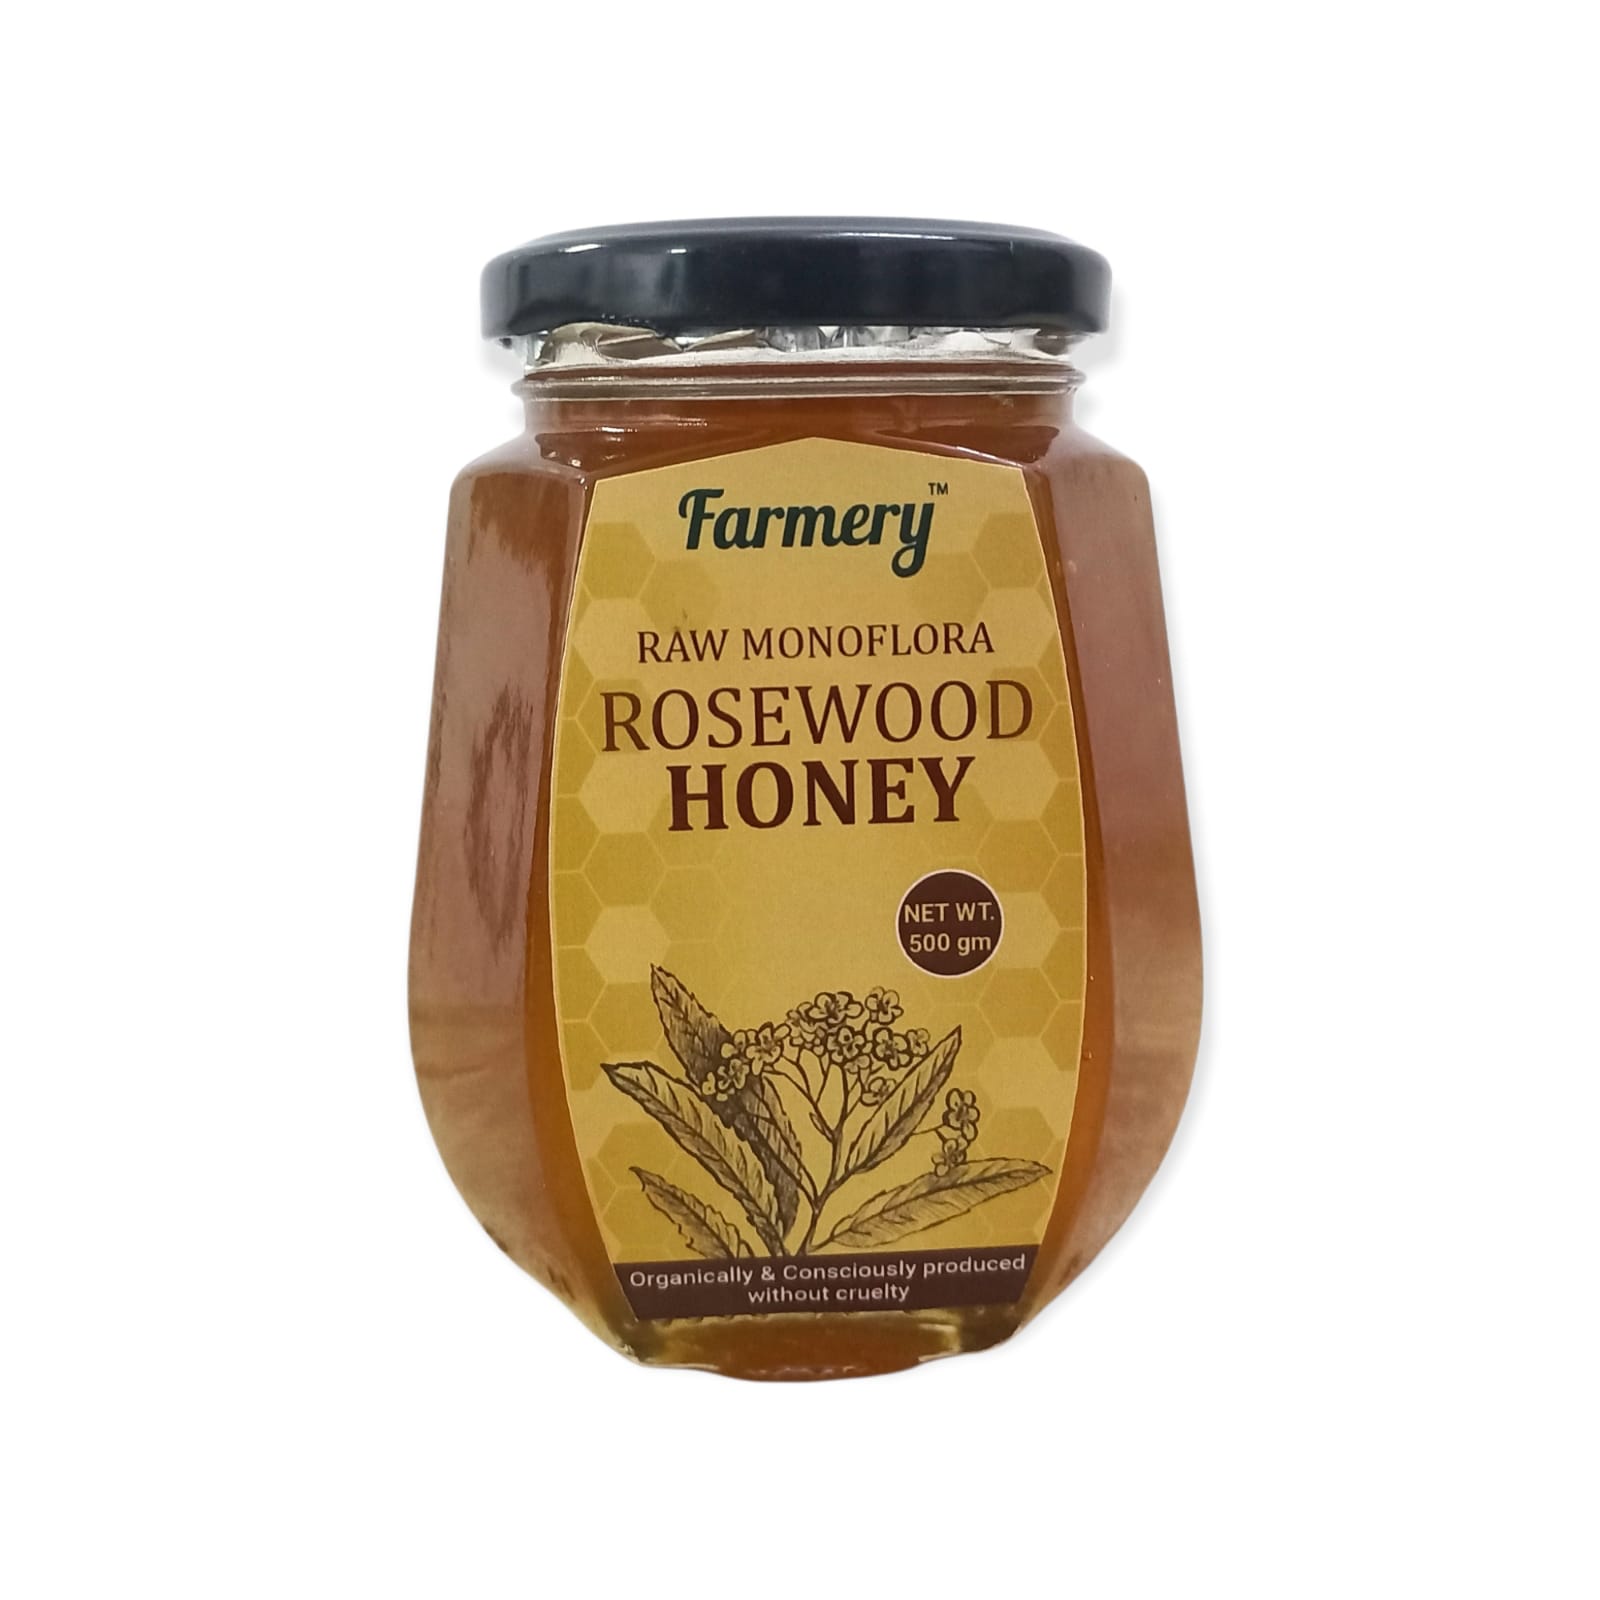 Raw Monoflora Rosewood Honey